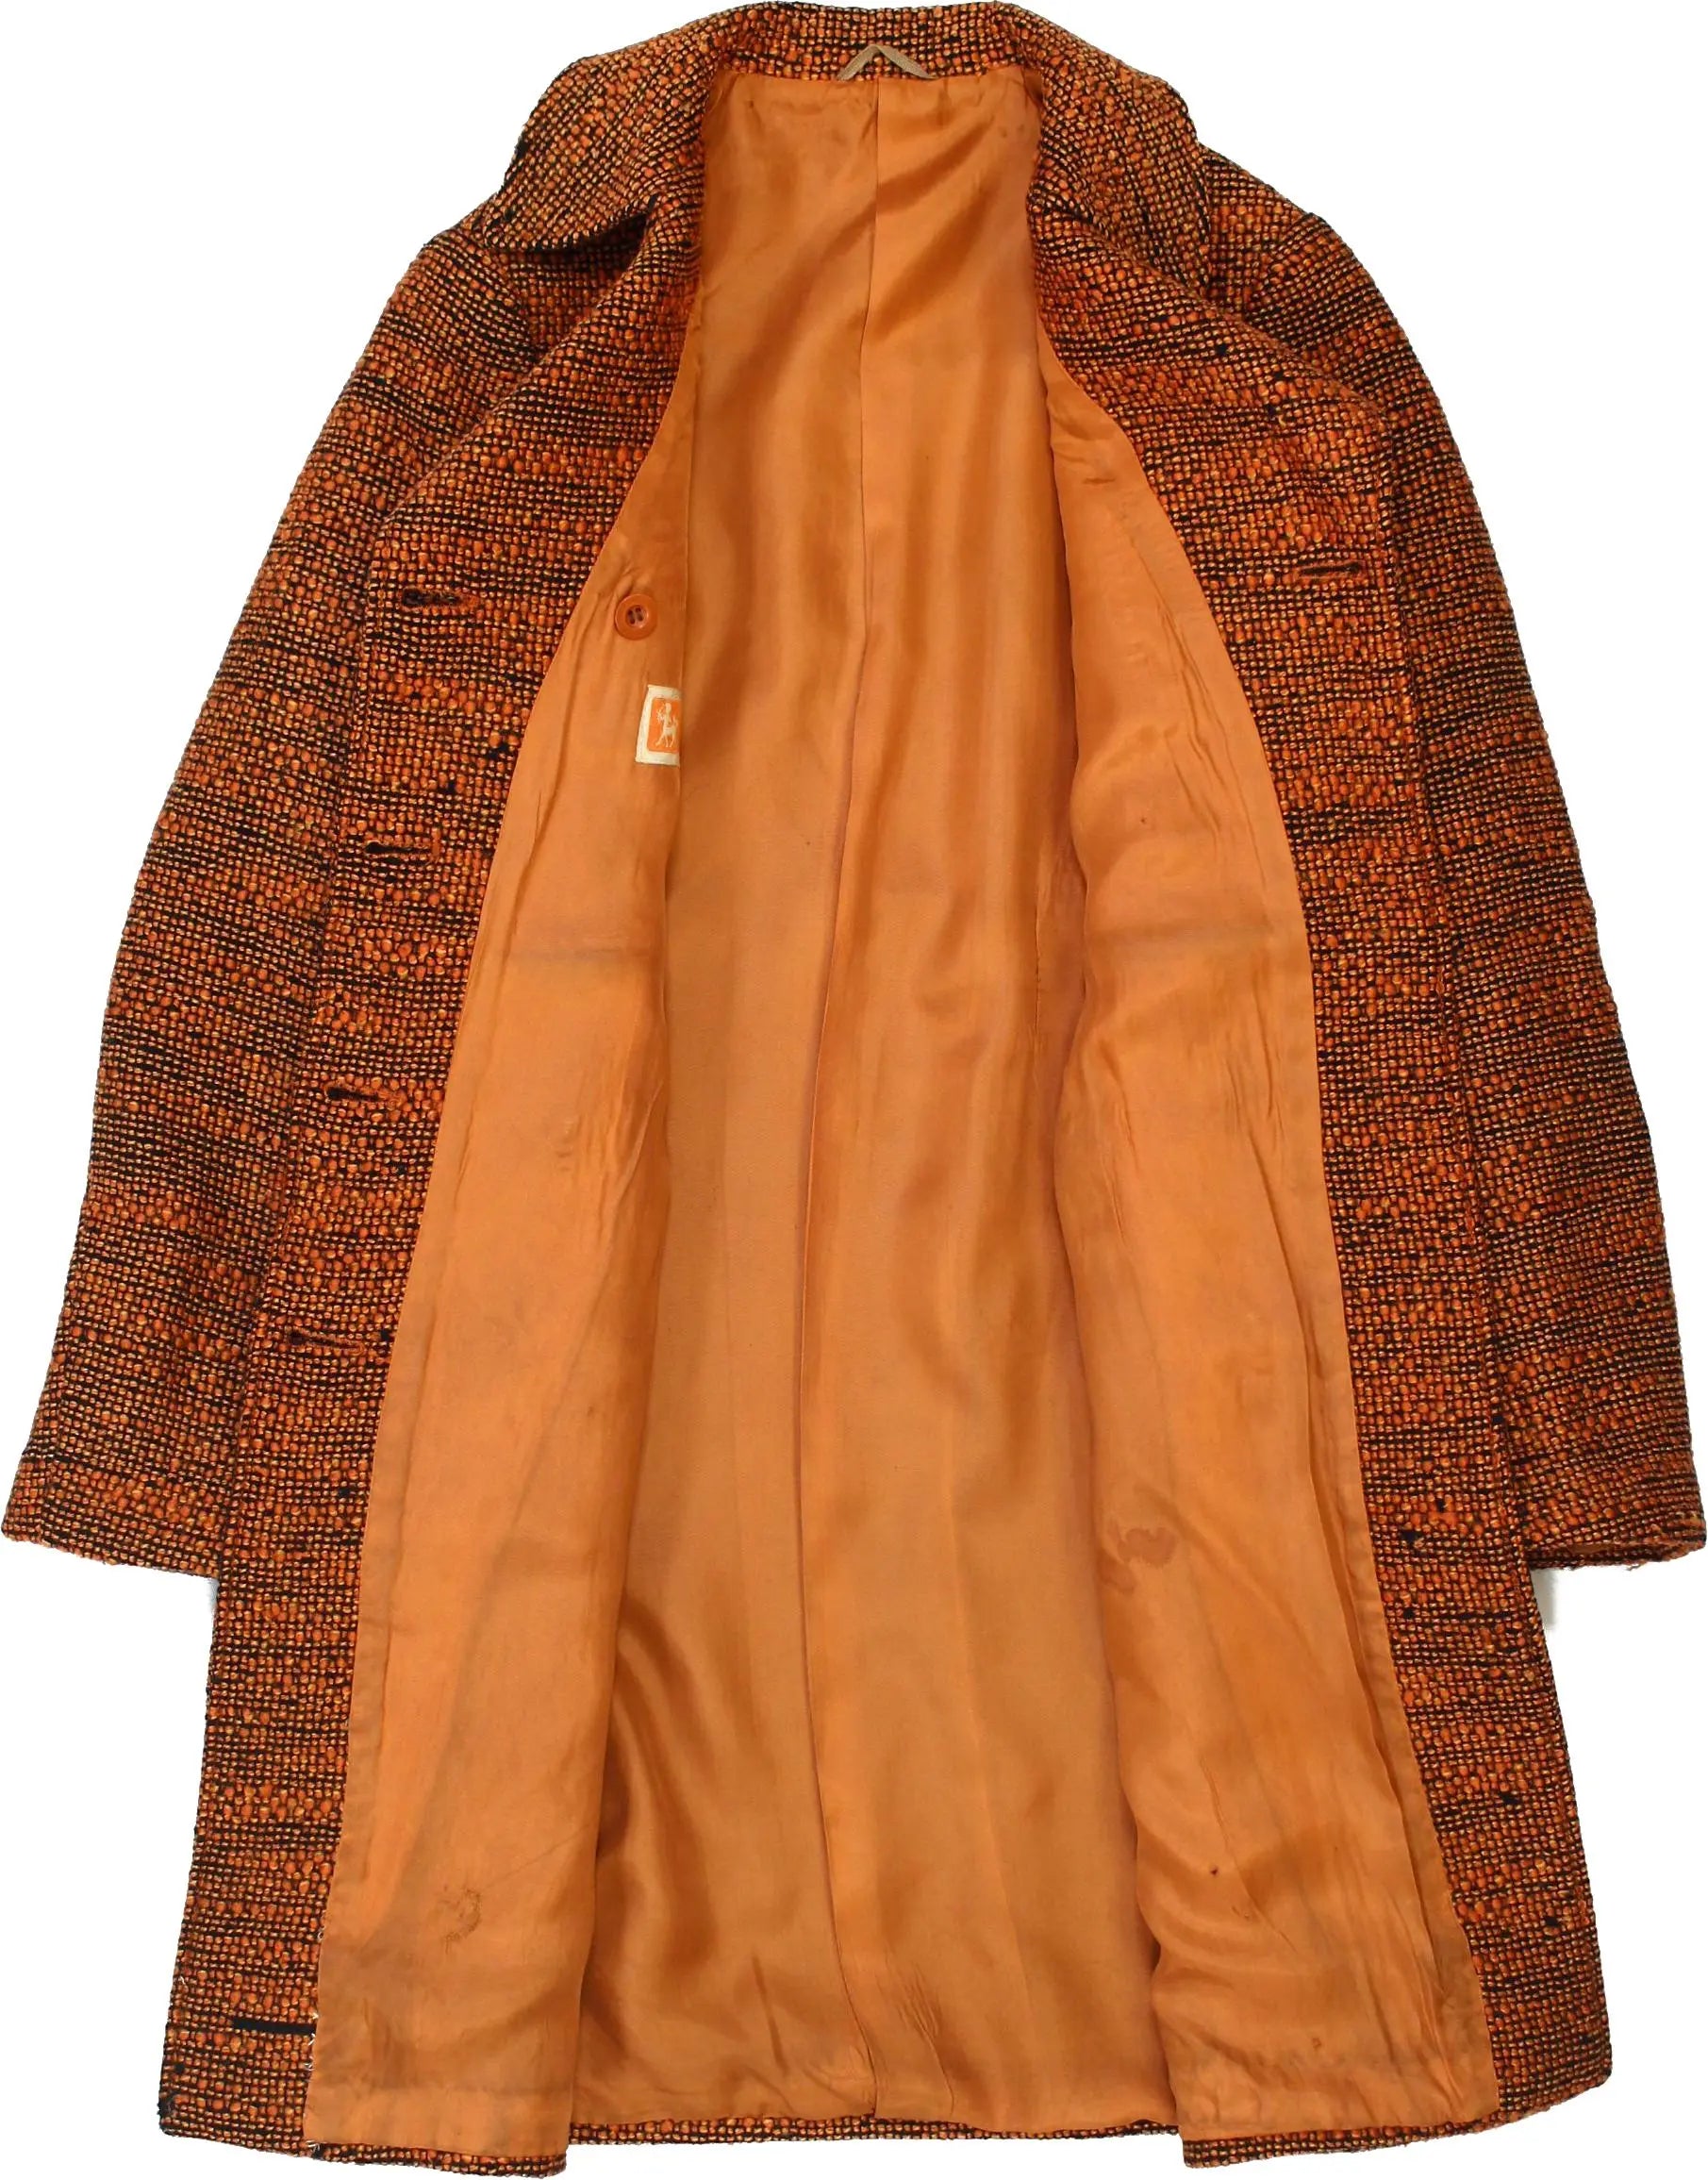 Magni - Orange Coat- ThriftTale.com - Vintage and second handclothing